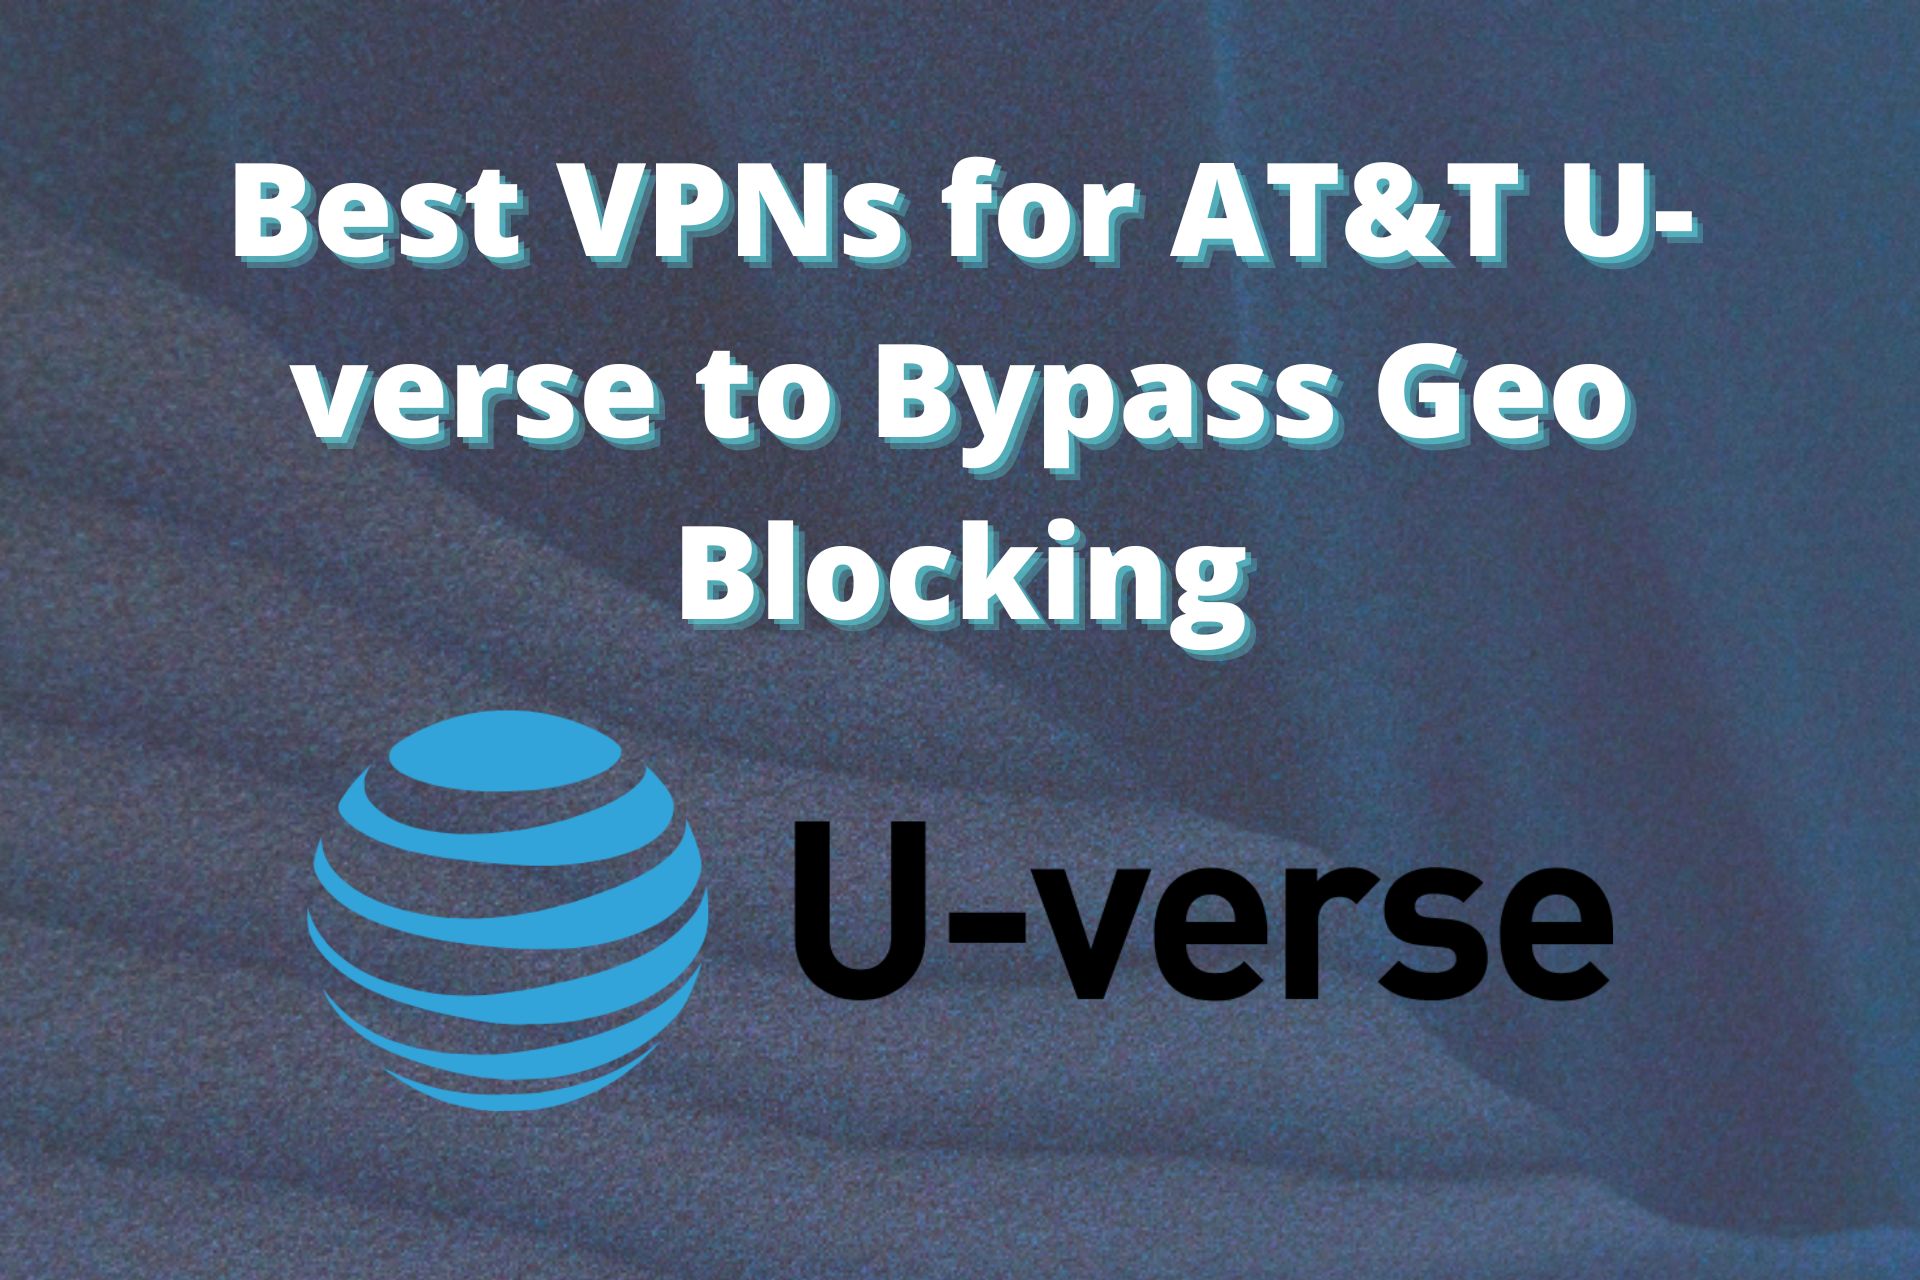 AT&T U-verse VPN: Top 7 Picks & How to Setup